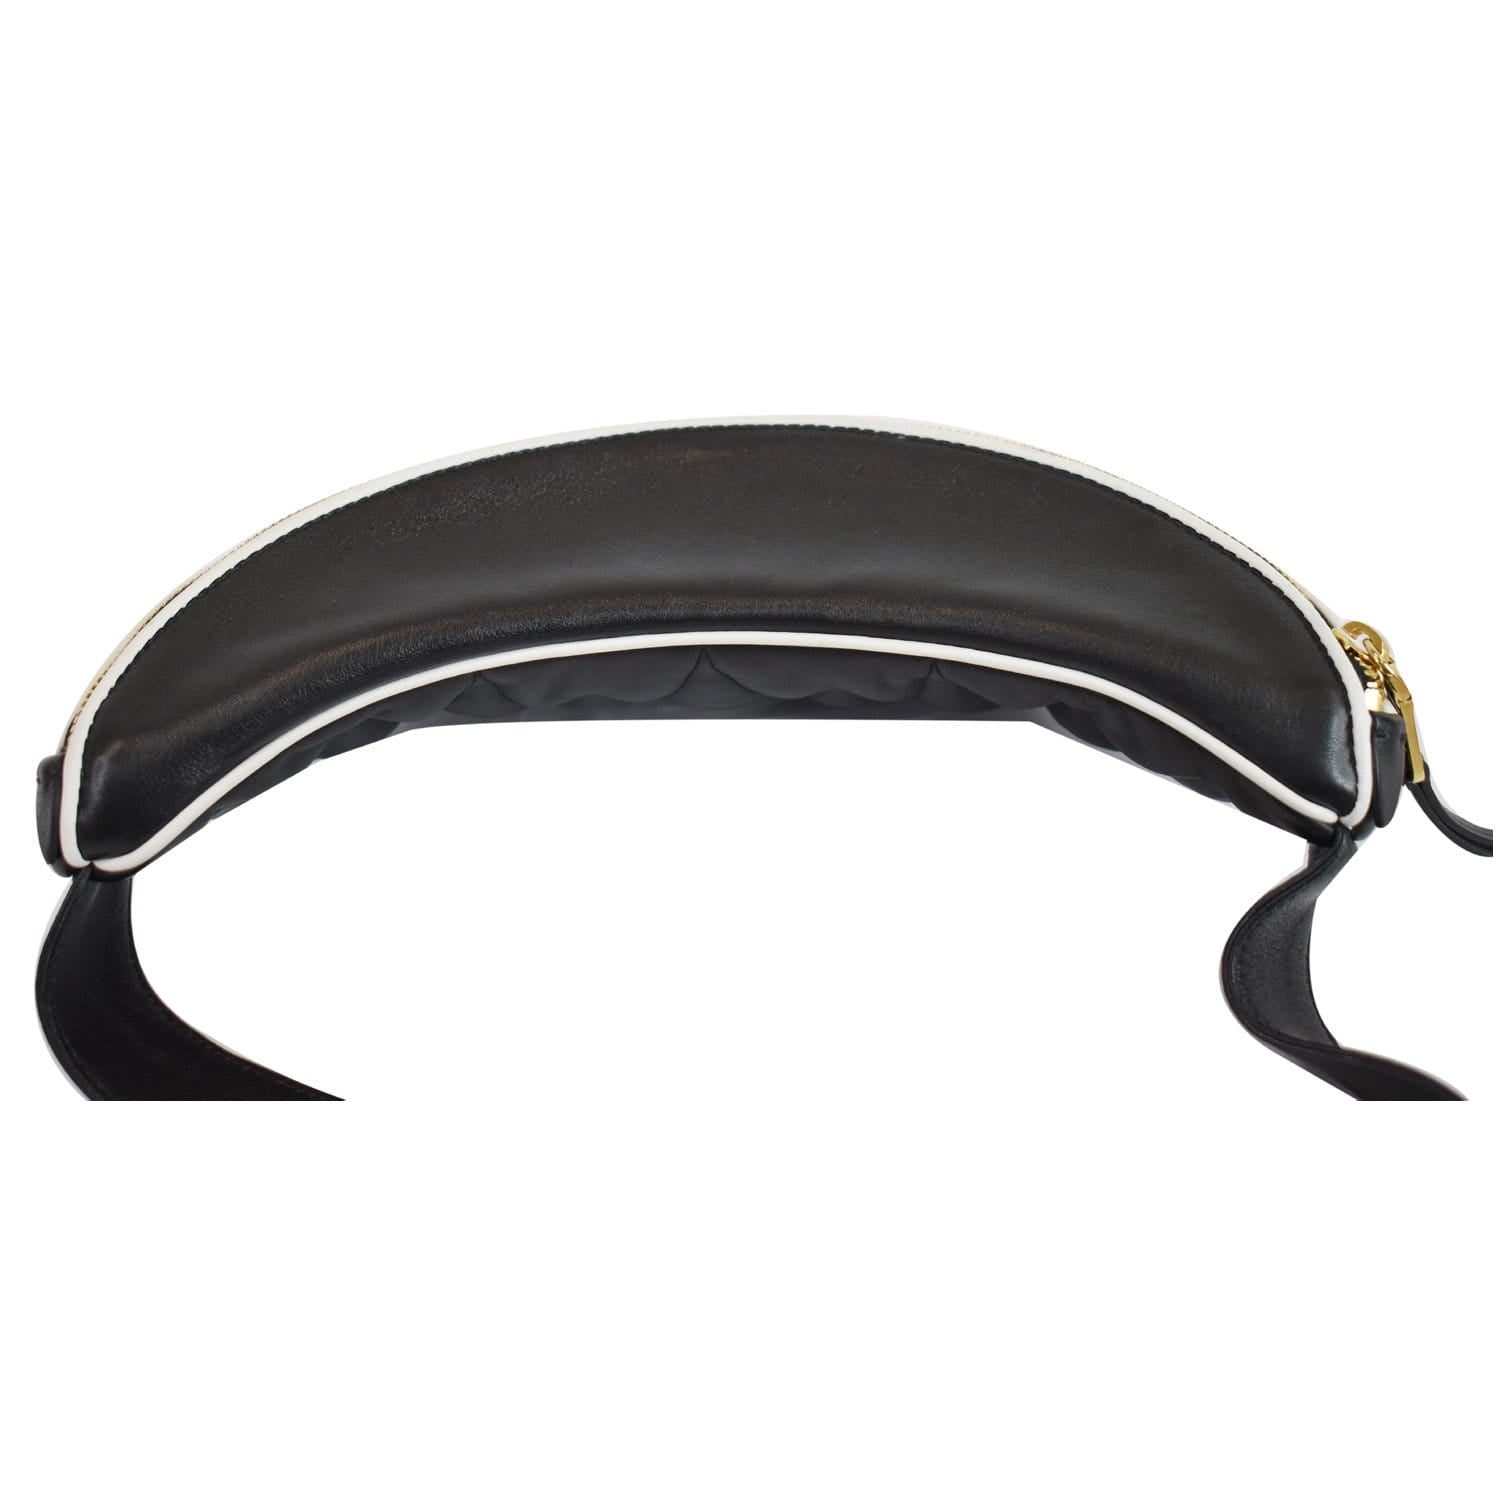 MIU MIU Two-Tone Matelasse Leather Belt Bum Bag Black/Green - 20% OFF